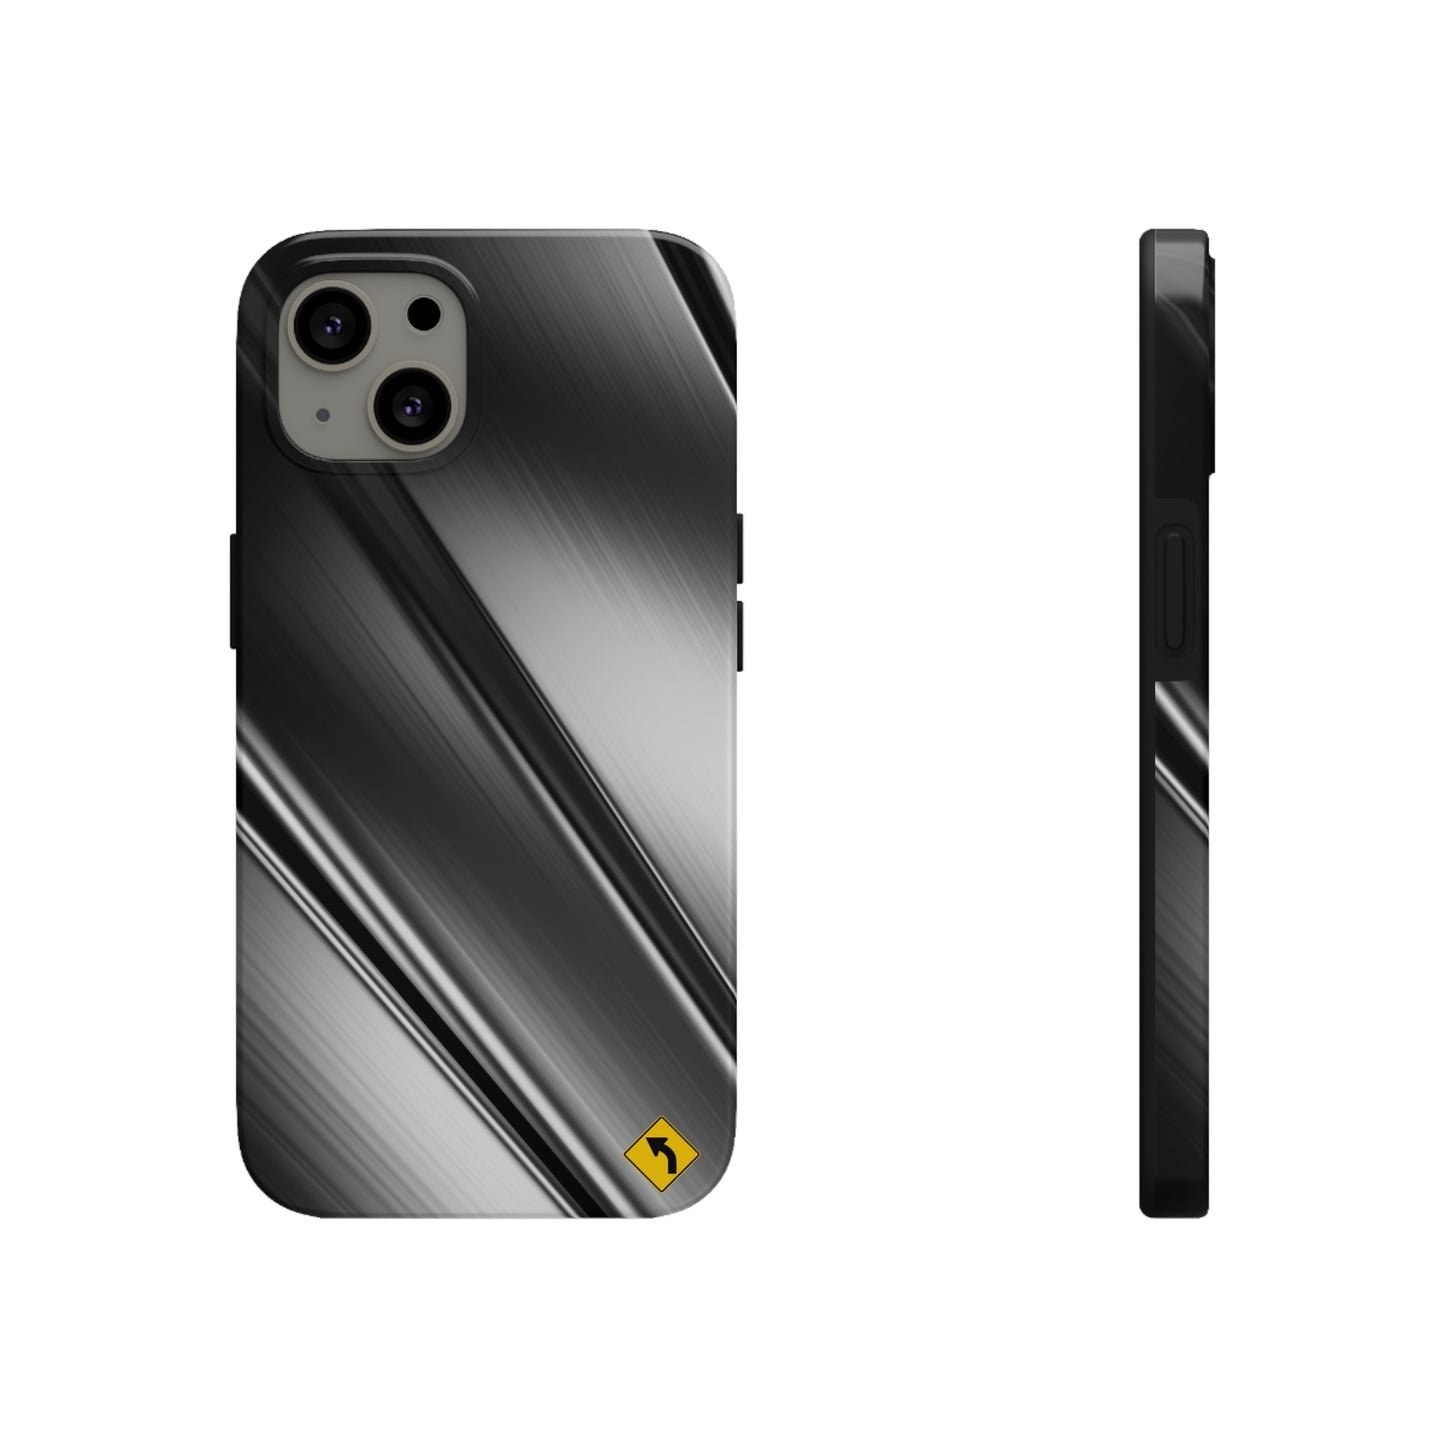 Steel Graphic Tough Phone Cases